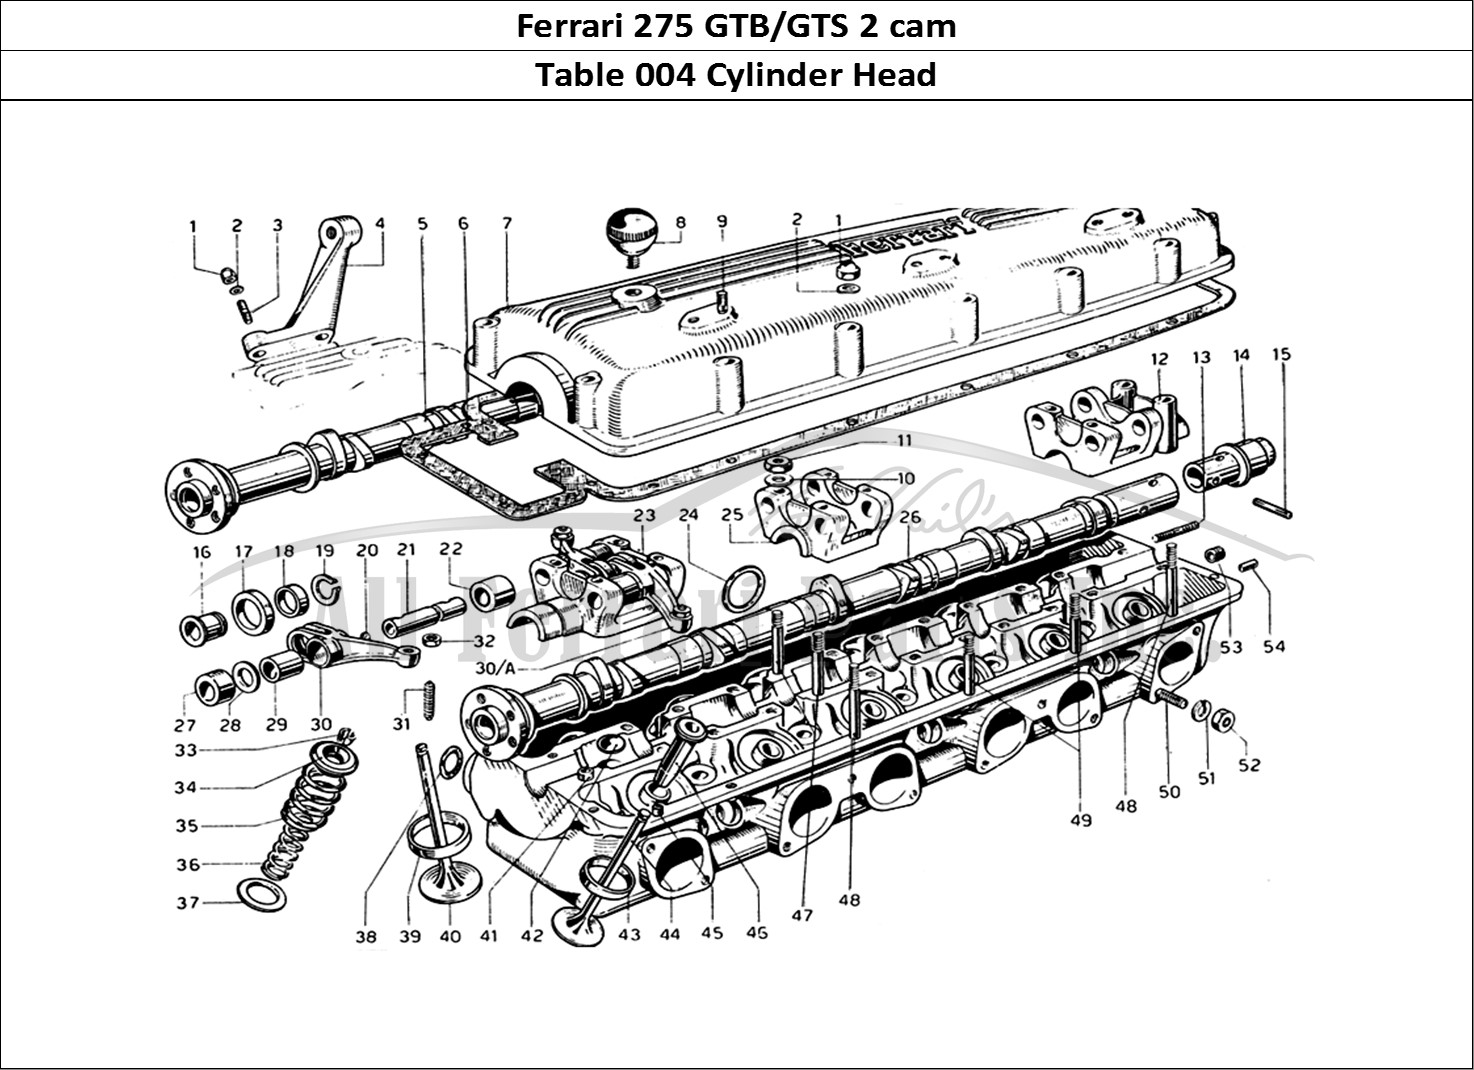 Ferrari Parts Ferrari 275 GTB/GTS 2 cam Page 004 Cylinder Head